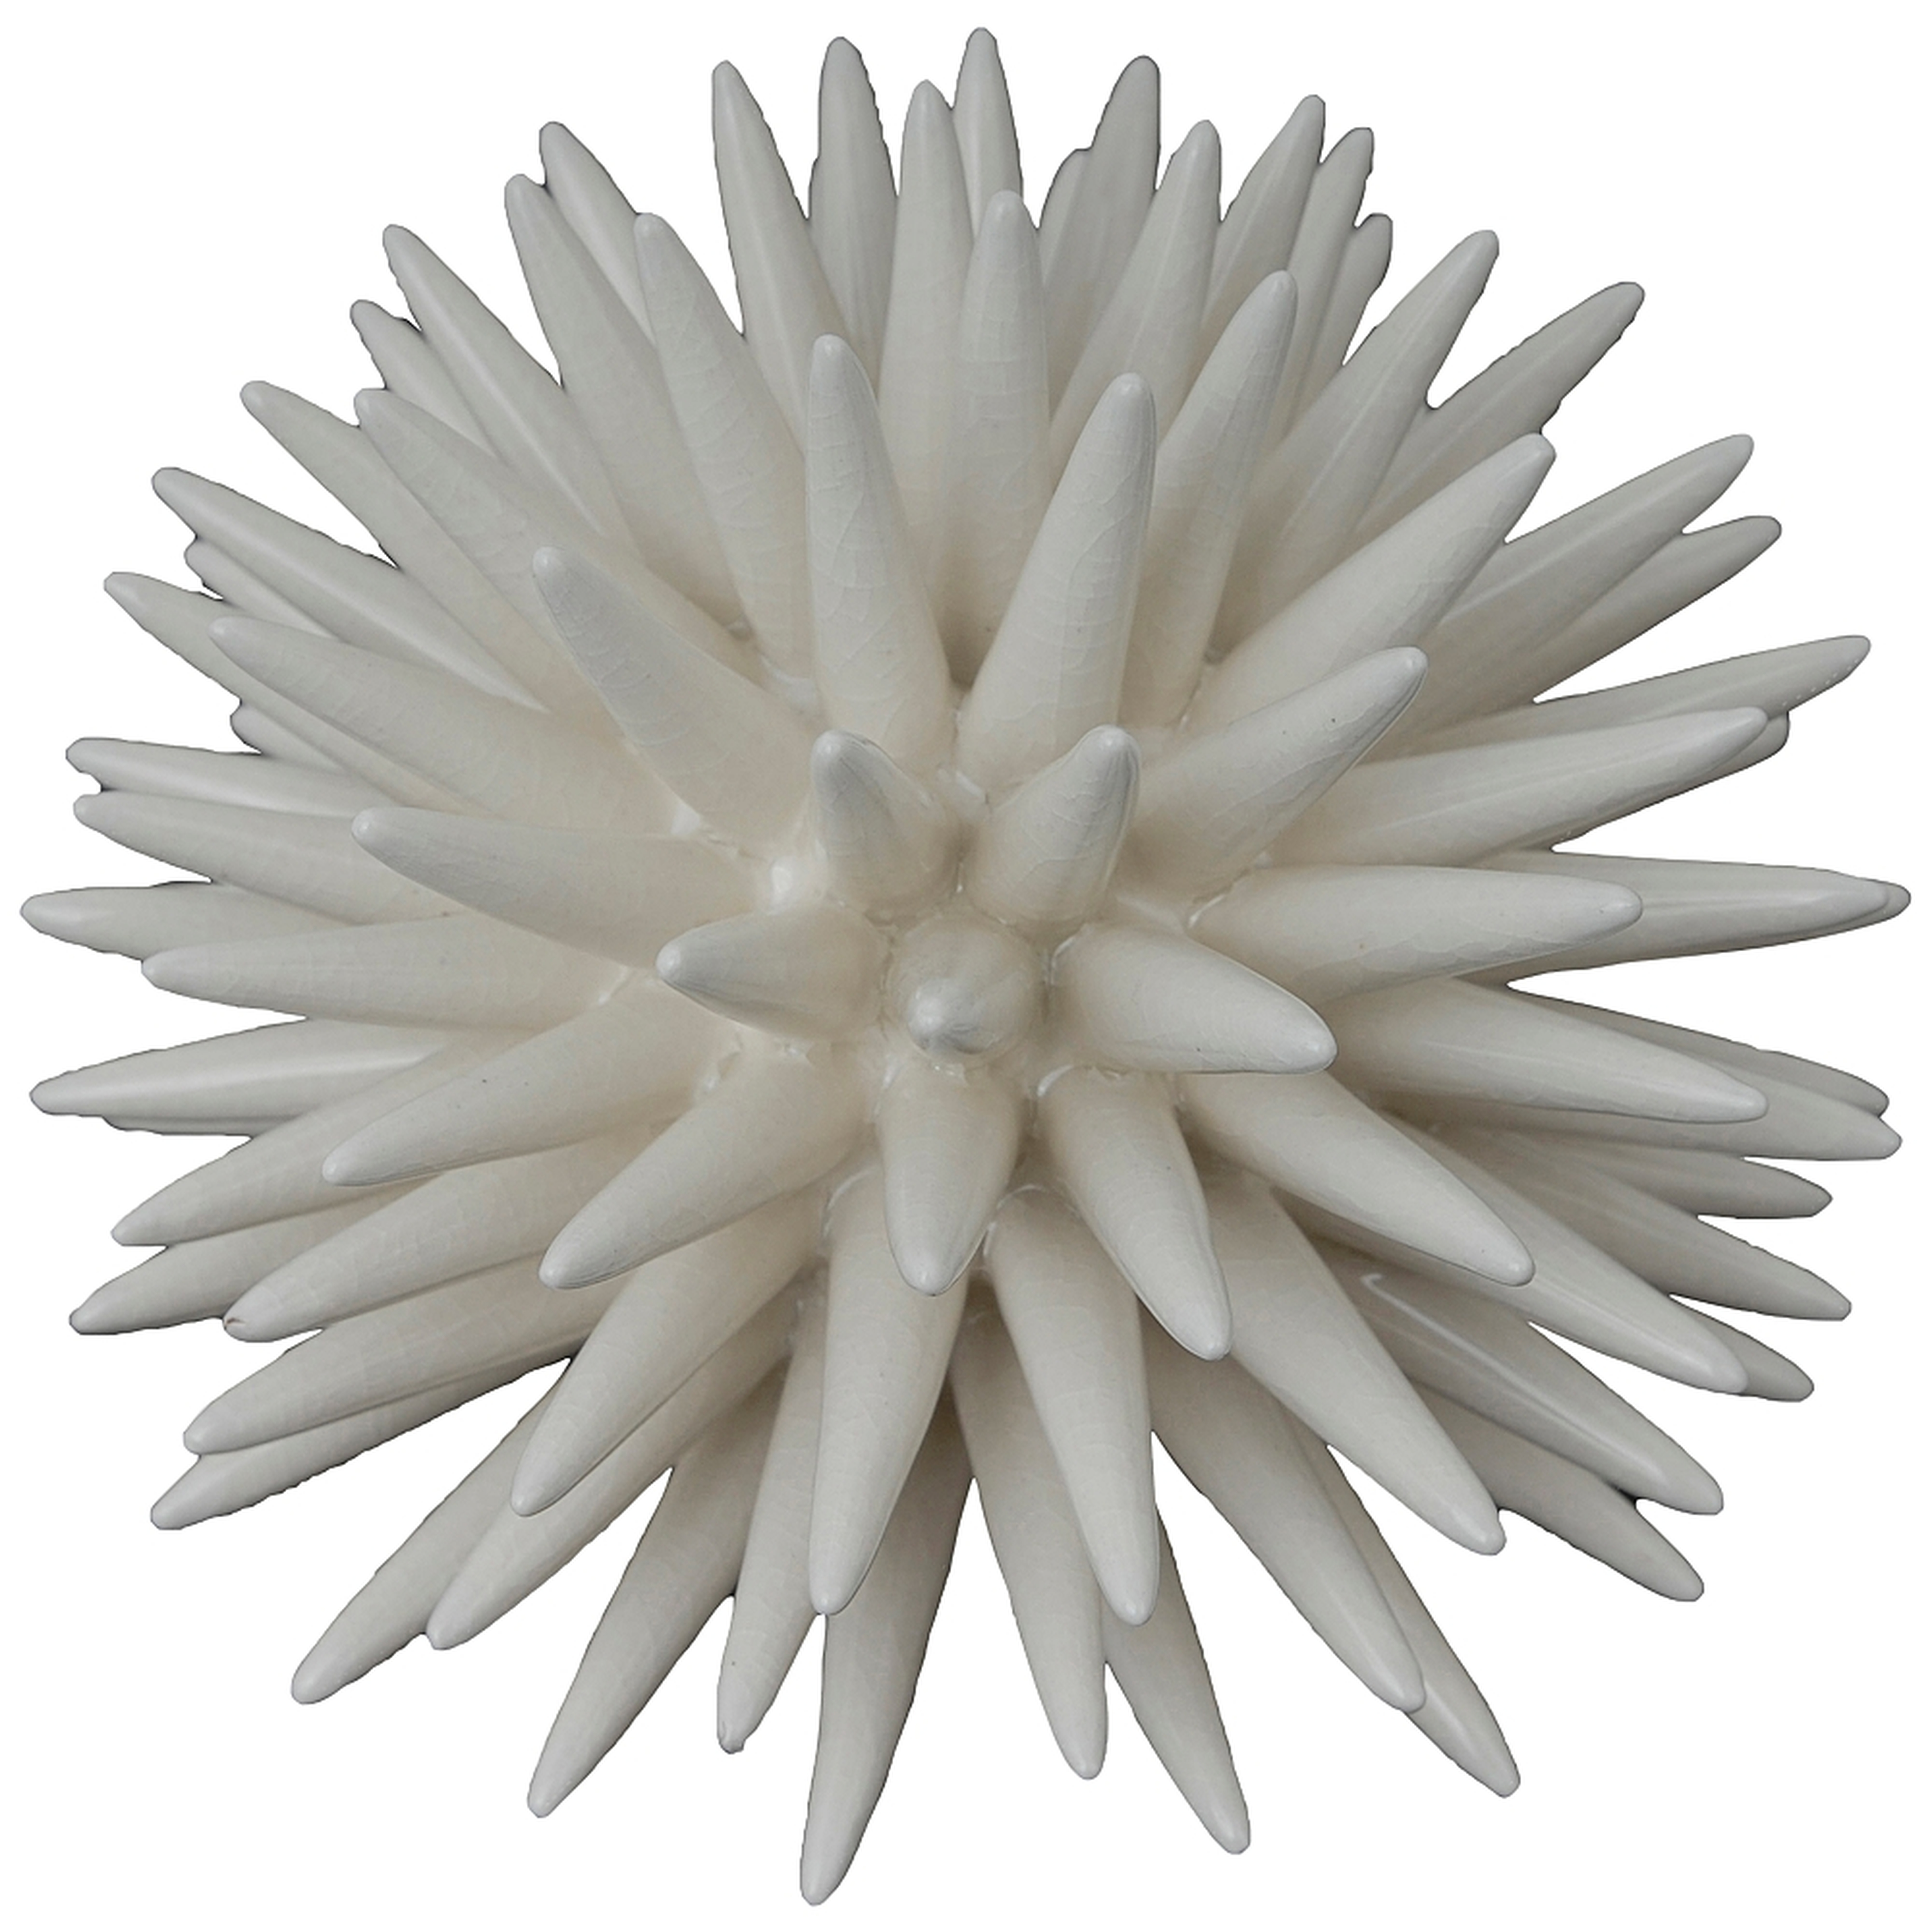 Vibrant White 6" Wide Coral Sculpture - Style # 182A1 - Lamps Plus